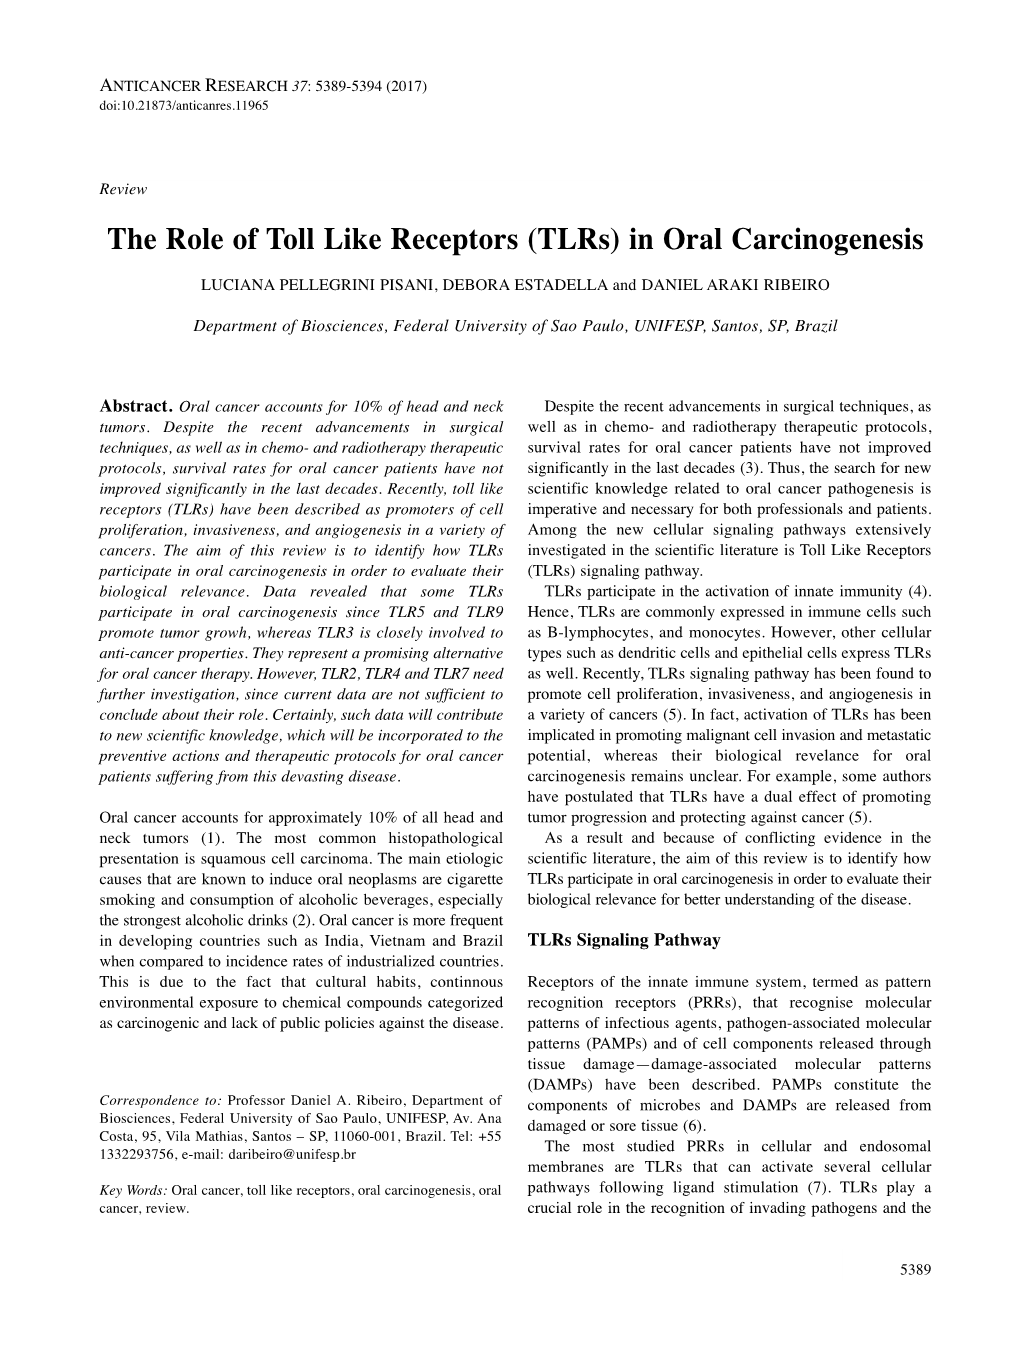 The Role of Toll Like Receptors (Tlrs) in Oral Carcinogenesis LUCIANA PELLEGRINI PISANI, DEBORA ESTADELLA and DANIEL ARAKI RIBEIRO